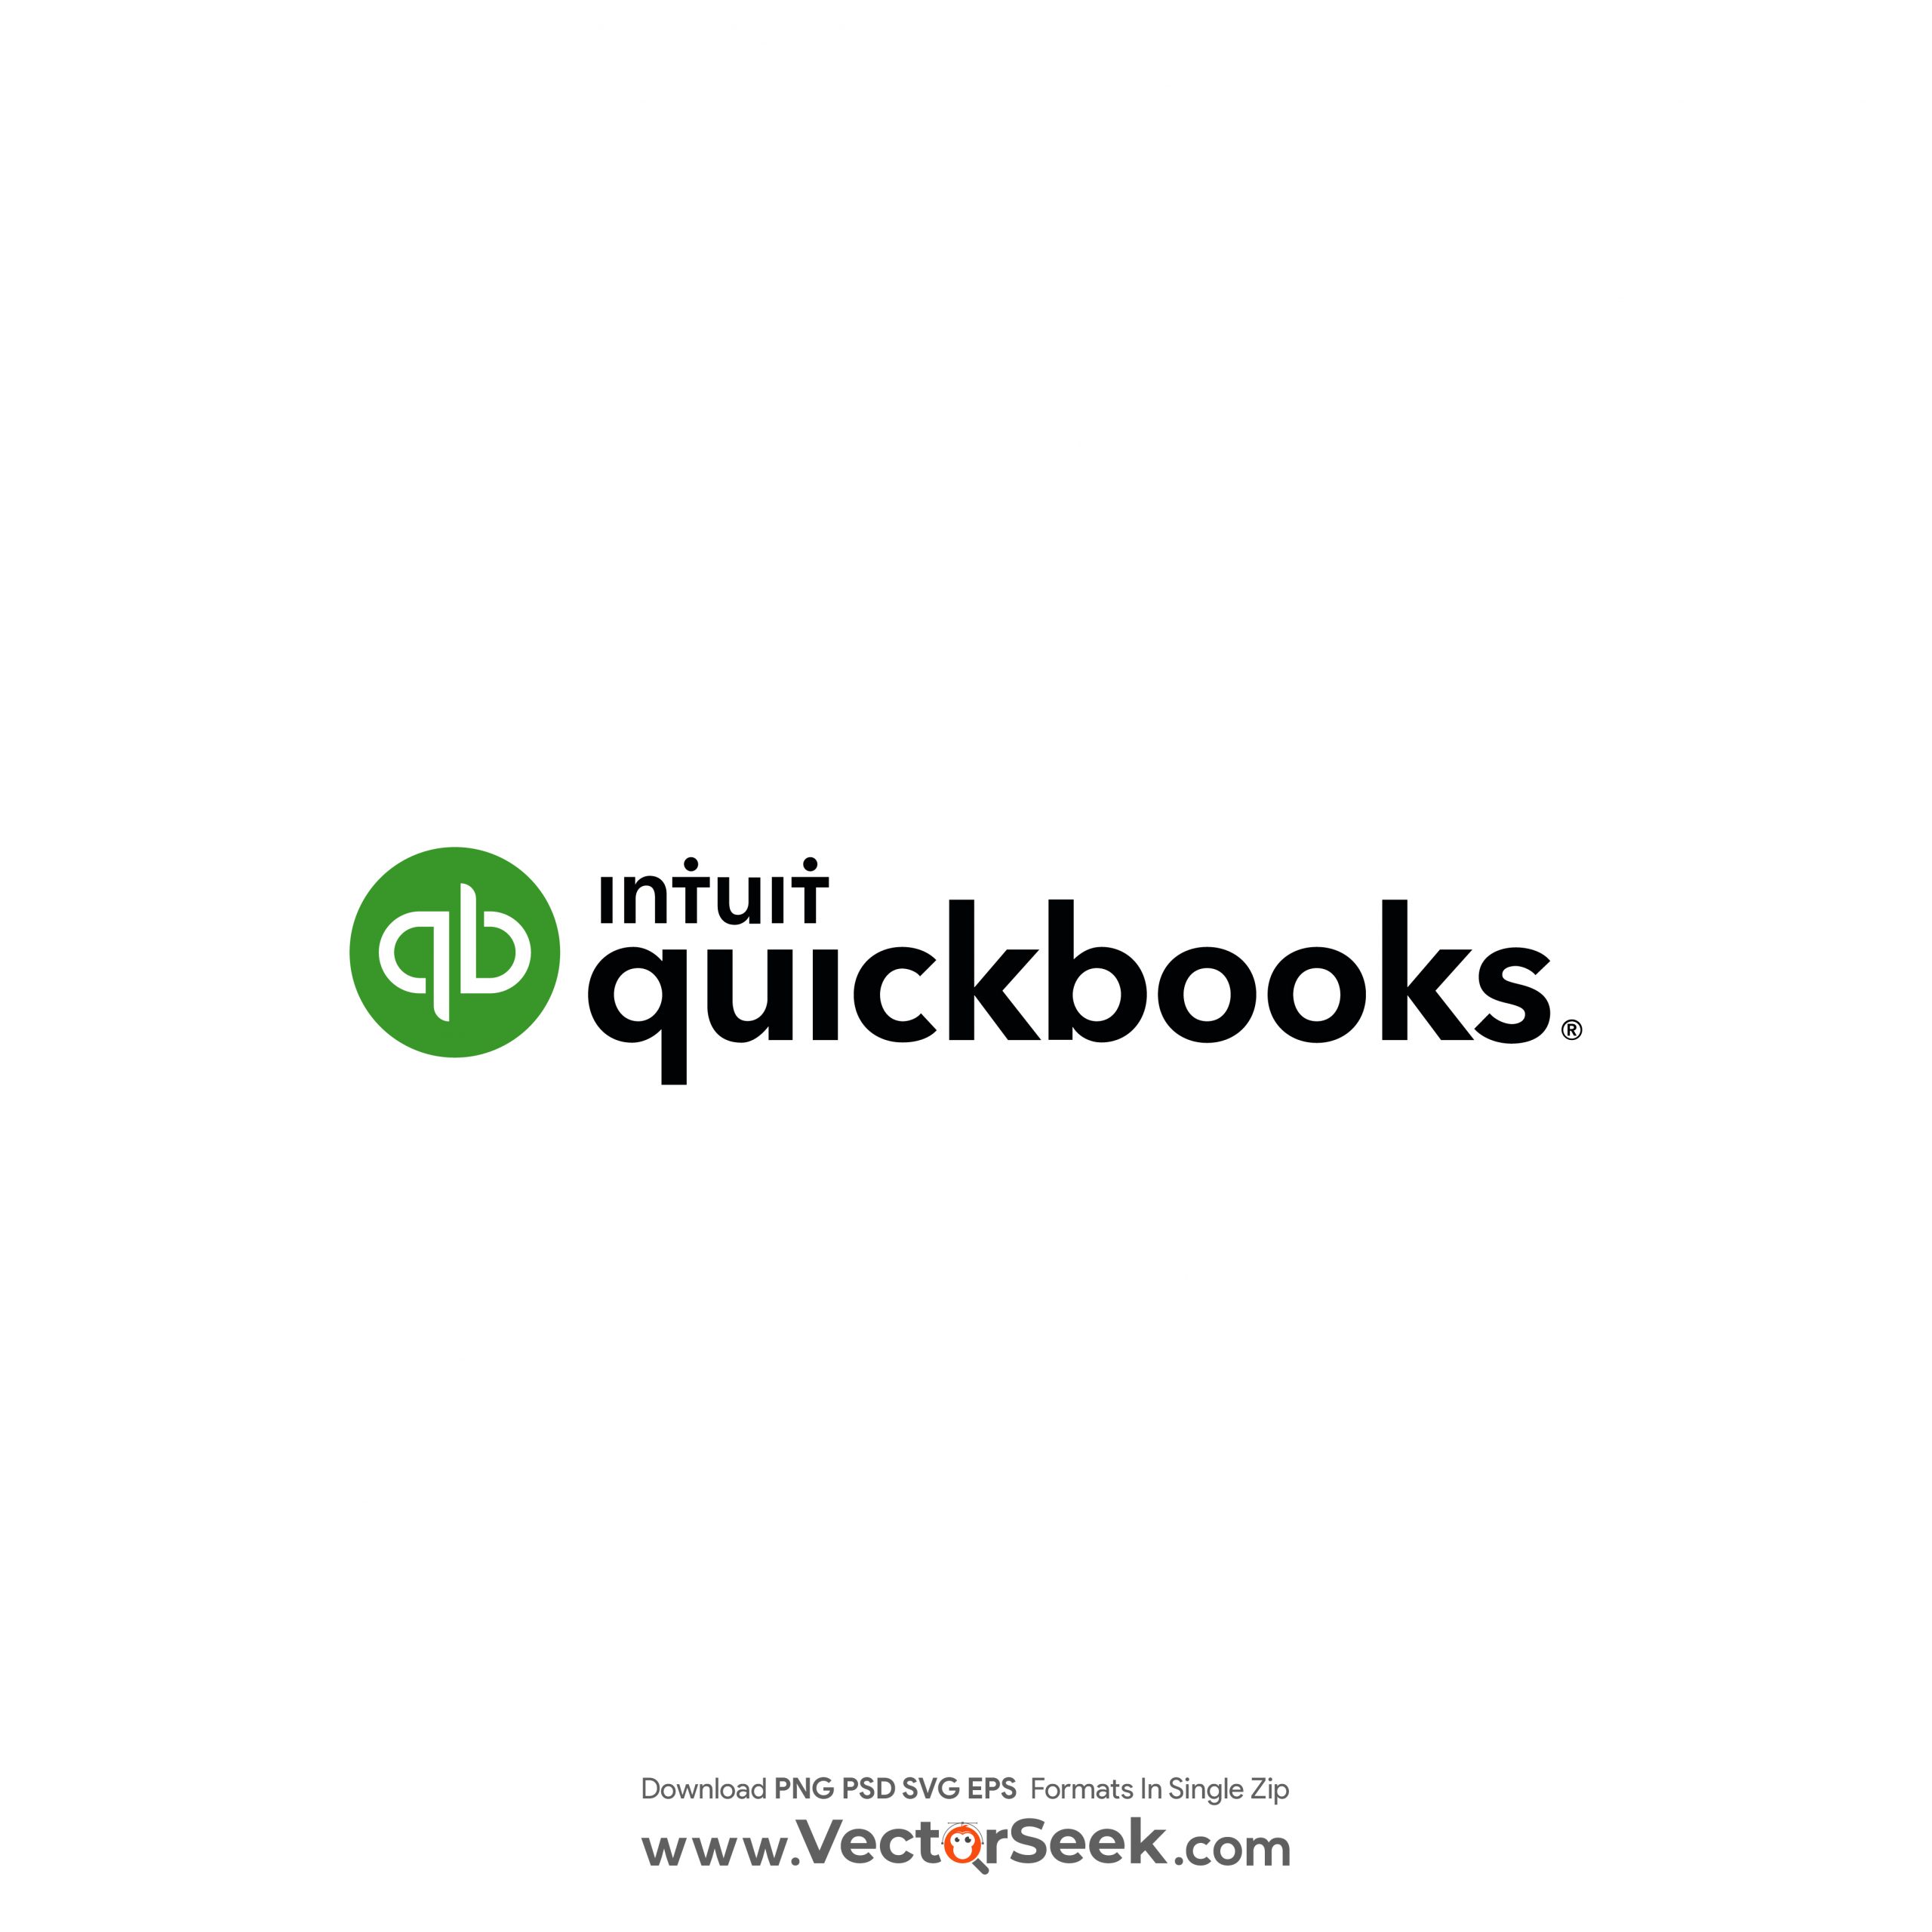 quickbooks logo has black background